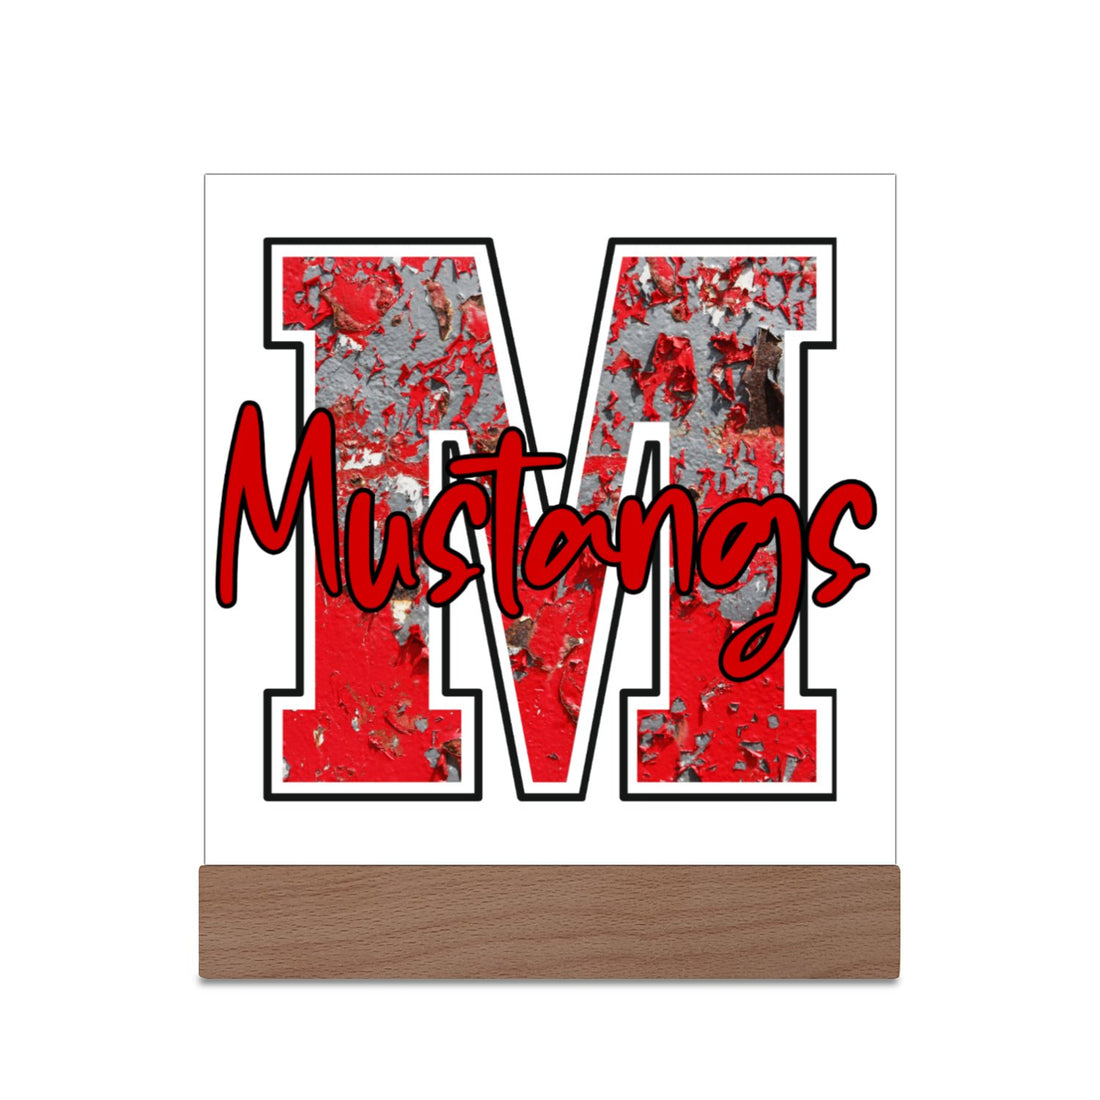 Macksville Mustangs Plaque - Positively Sassy - Macksville Mustangs Plaque